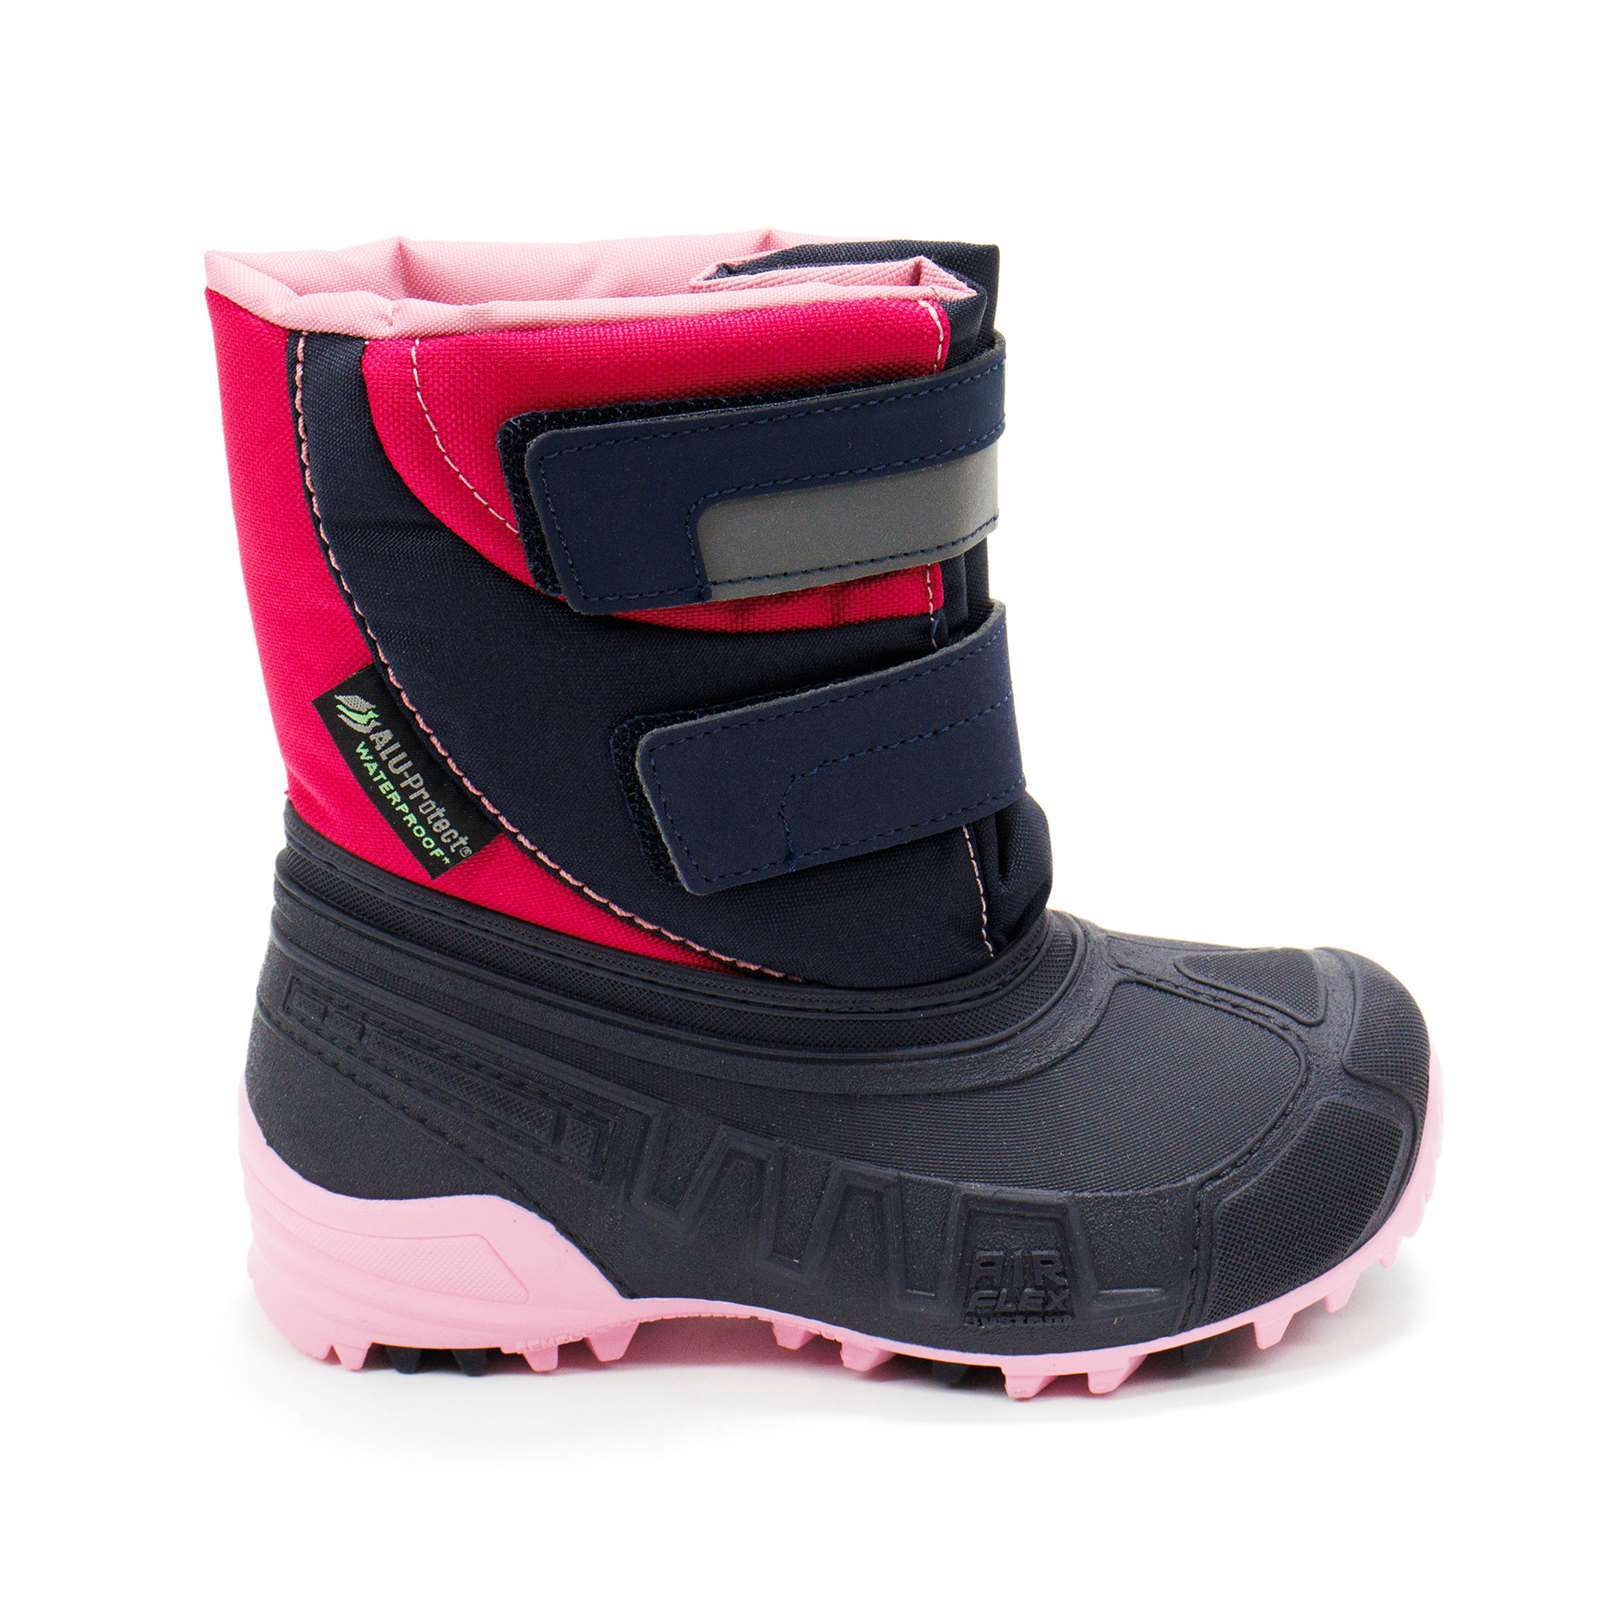 Boatilus Girl Hybrid02 Waterproof Boots